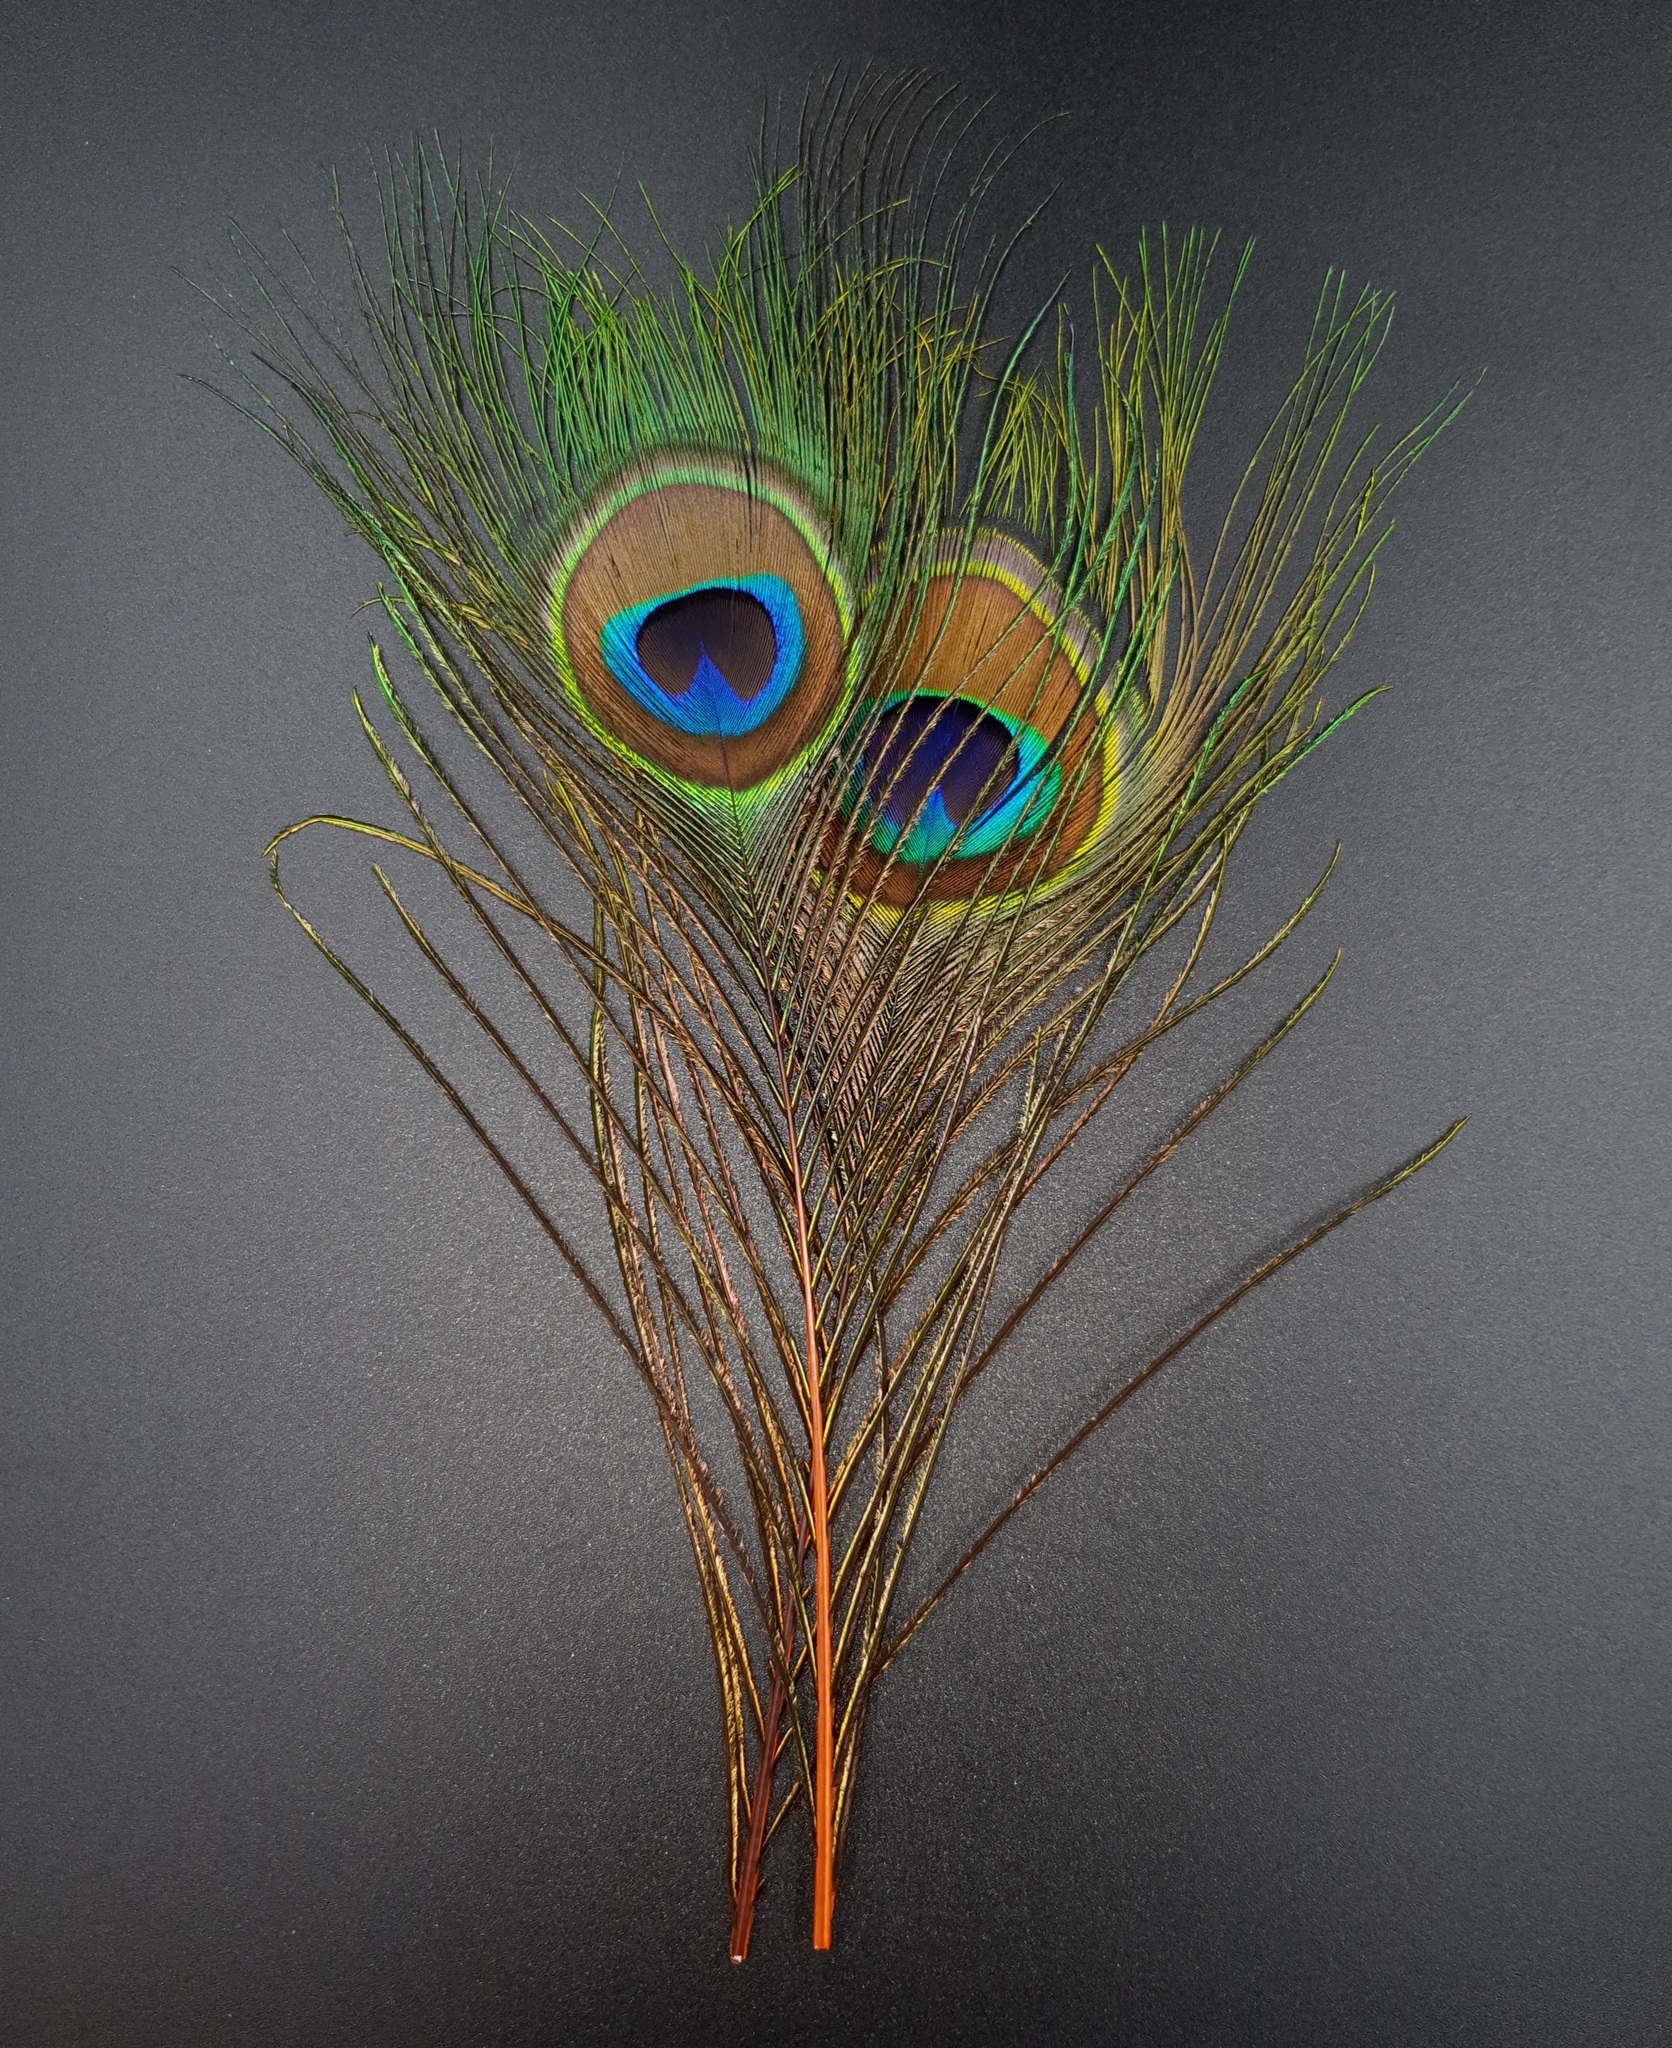 Peacock eye feather